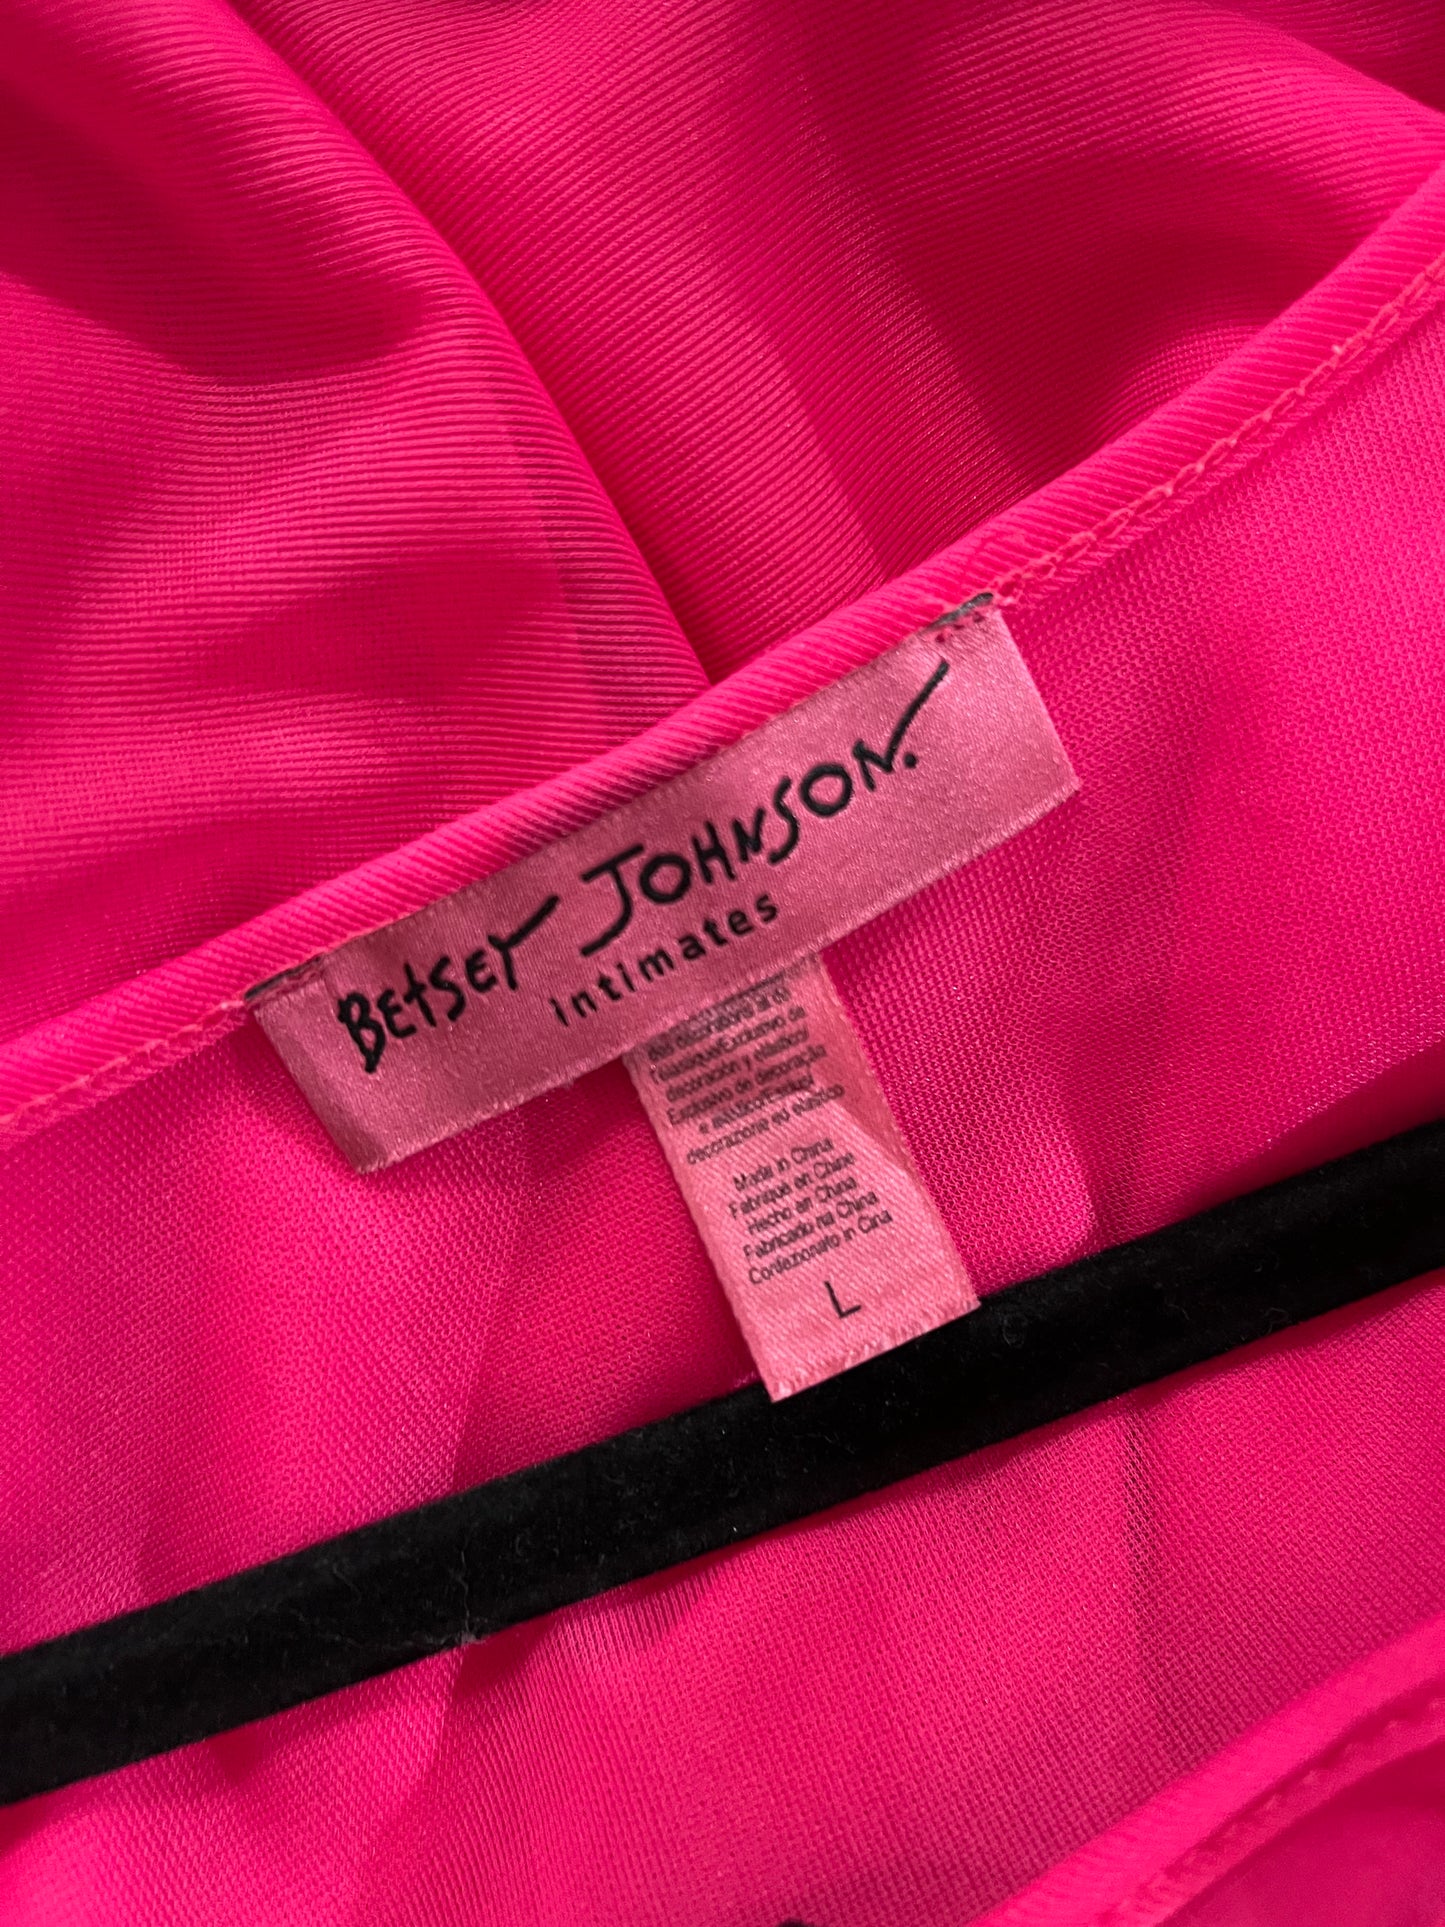 Y2k 'Betsy Johnson' Pink Nylon Night Dress / Large